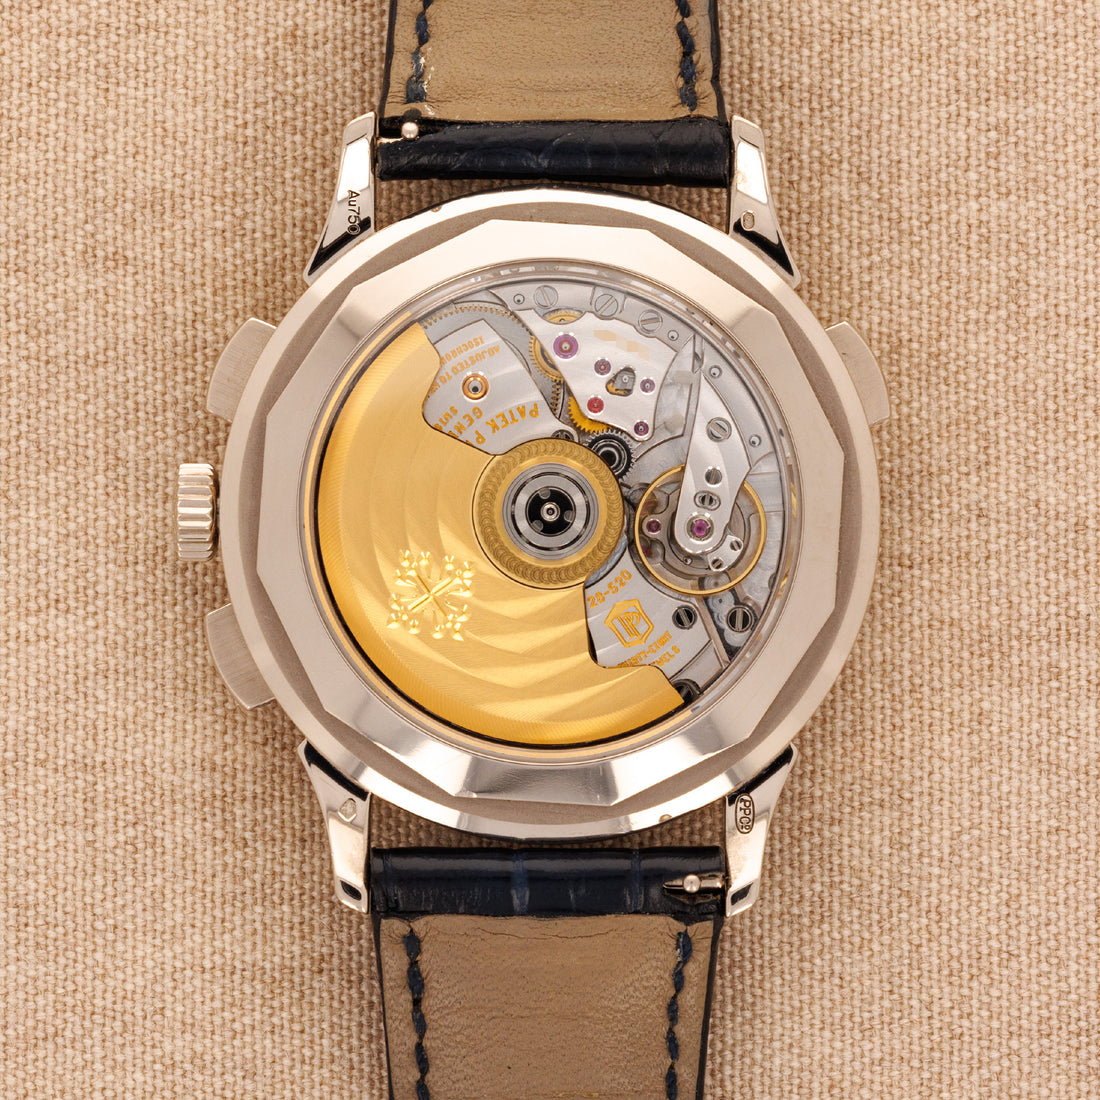 Patek Philippe White Gold World Time Chronograph Ref. 5930G